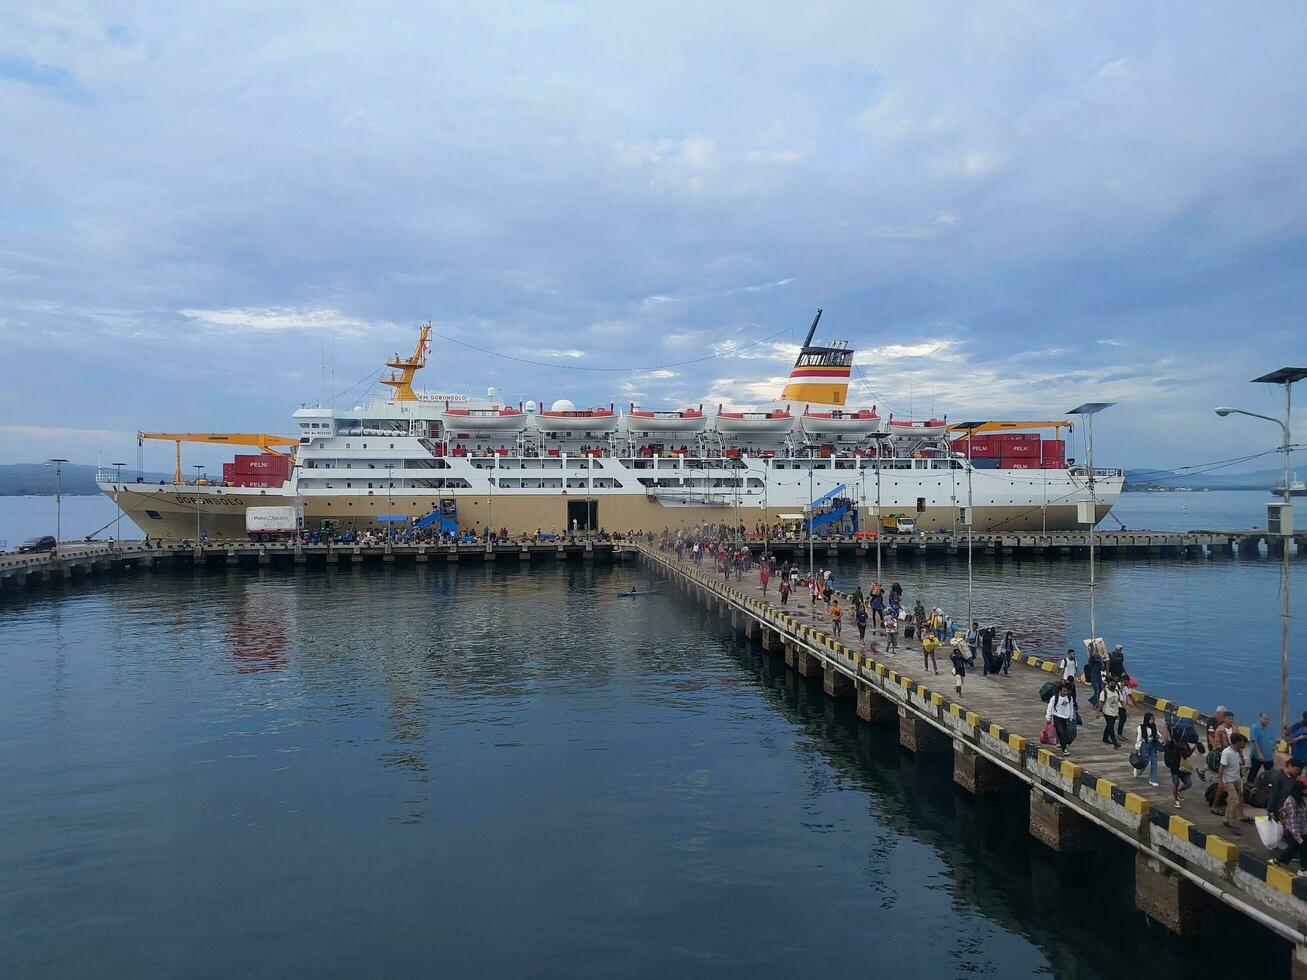 Bau-bau, Indonesia - November 22, 2022 - Photo of the Dobonsolo ship arriving and docking at Murhum port, Bau-bau city.